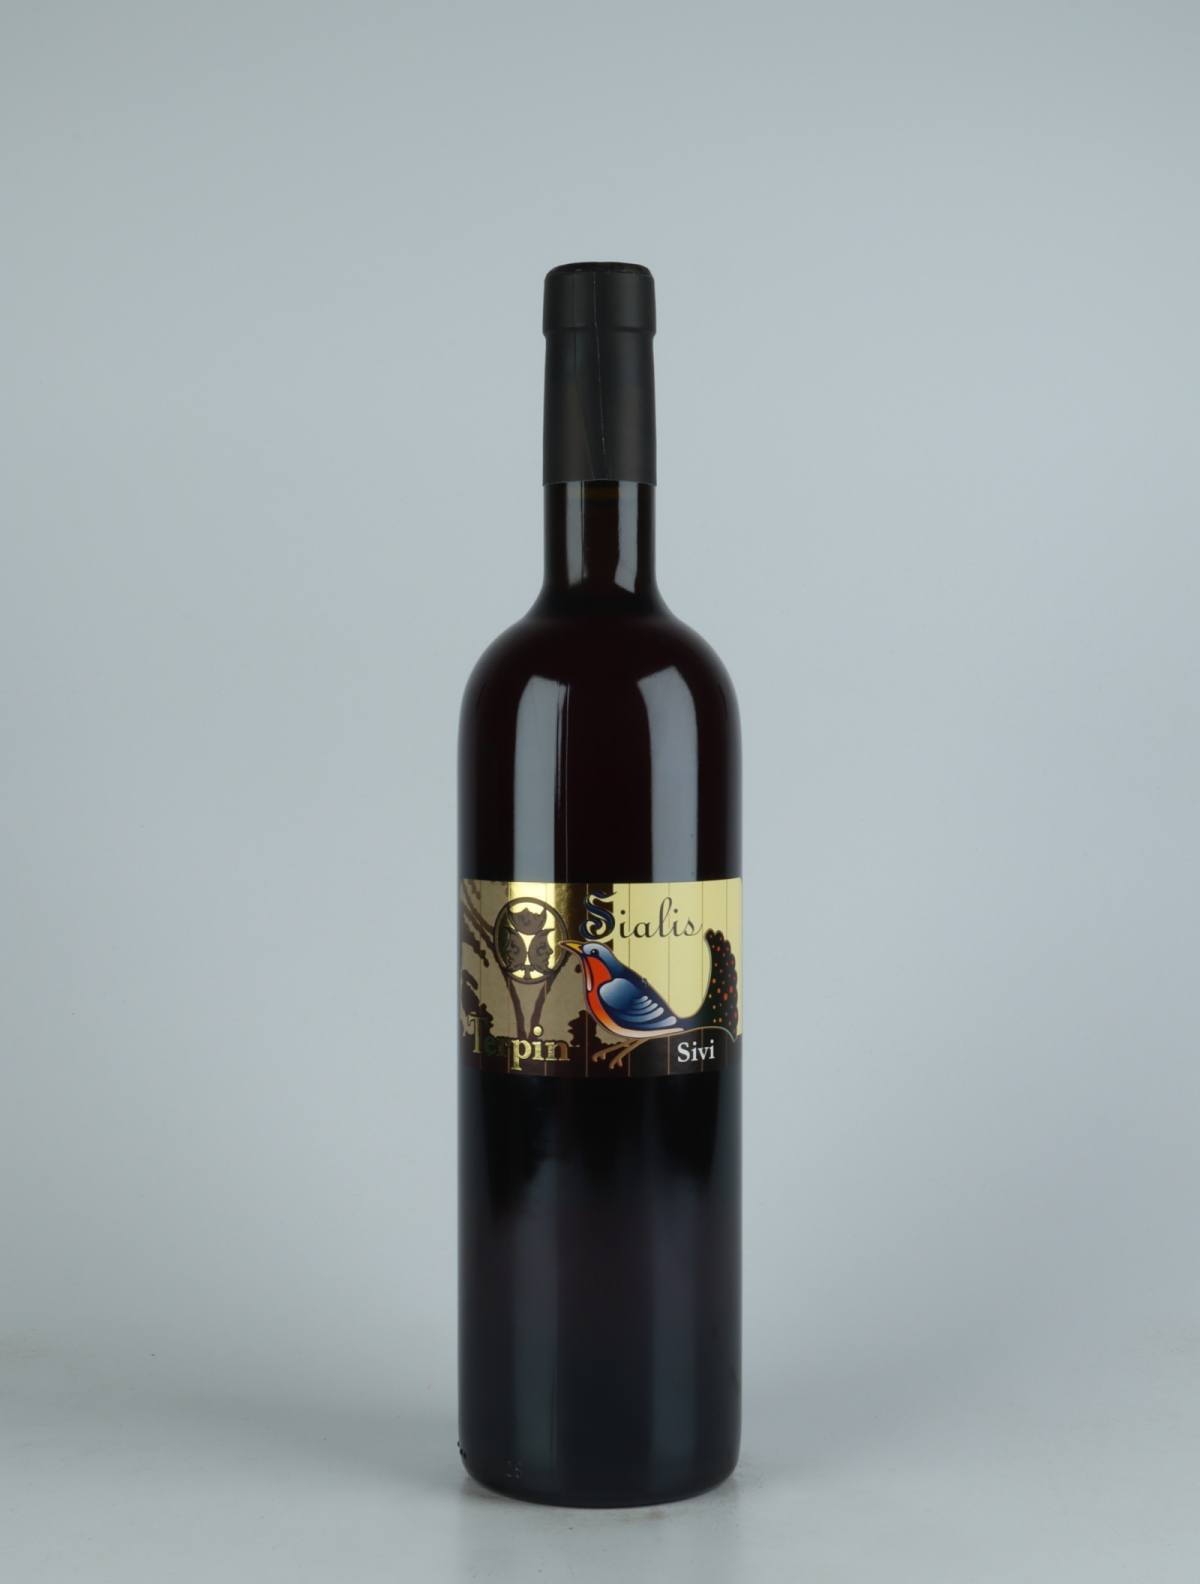 En flaske 2016 Sialis Bianco Sivi Orange vin fra Franco Terpin, Friuli i Italien